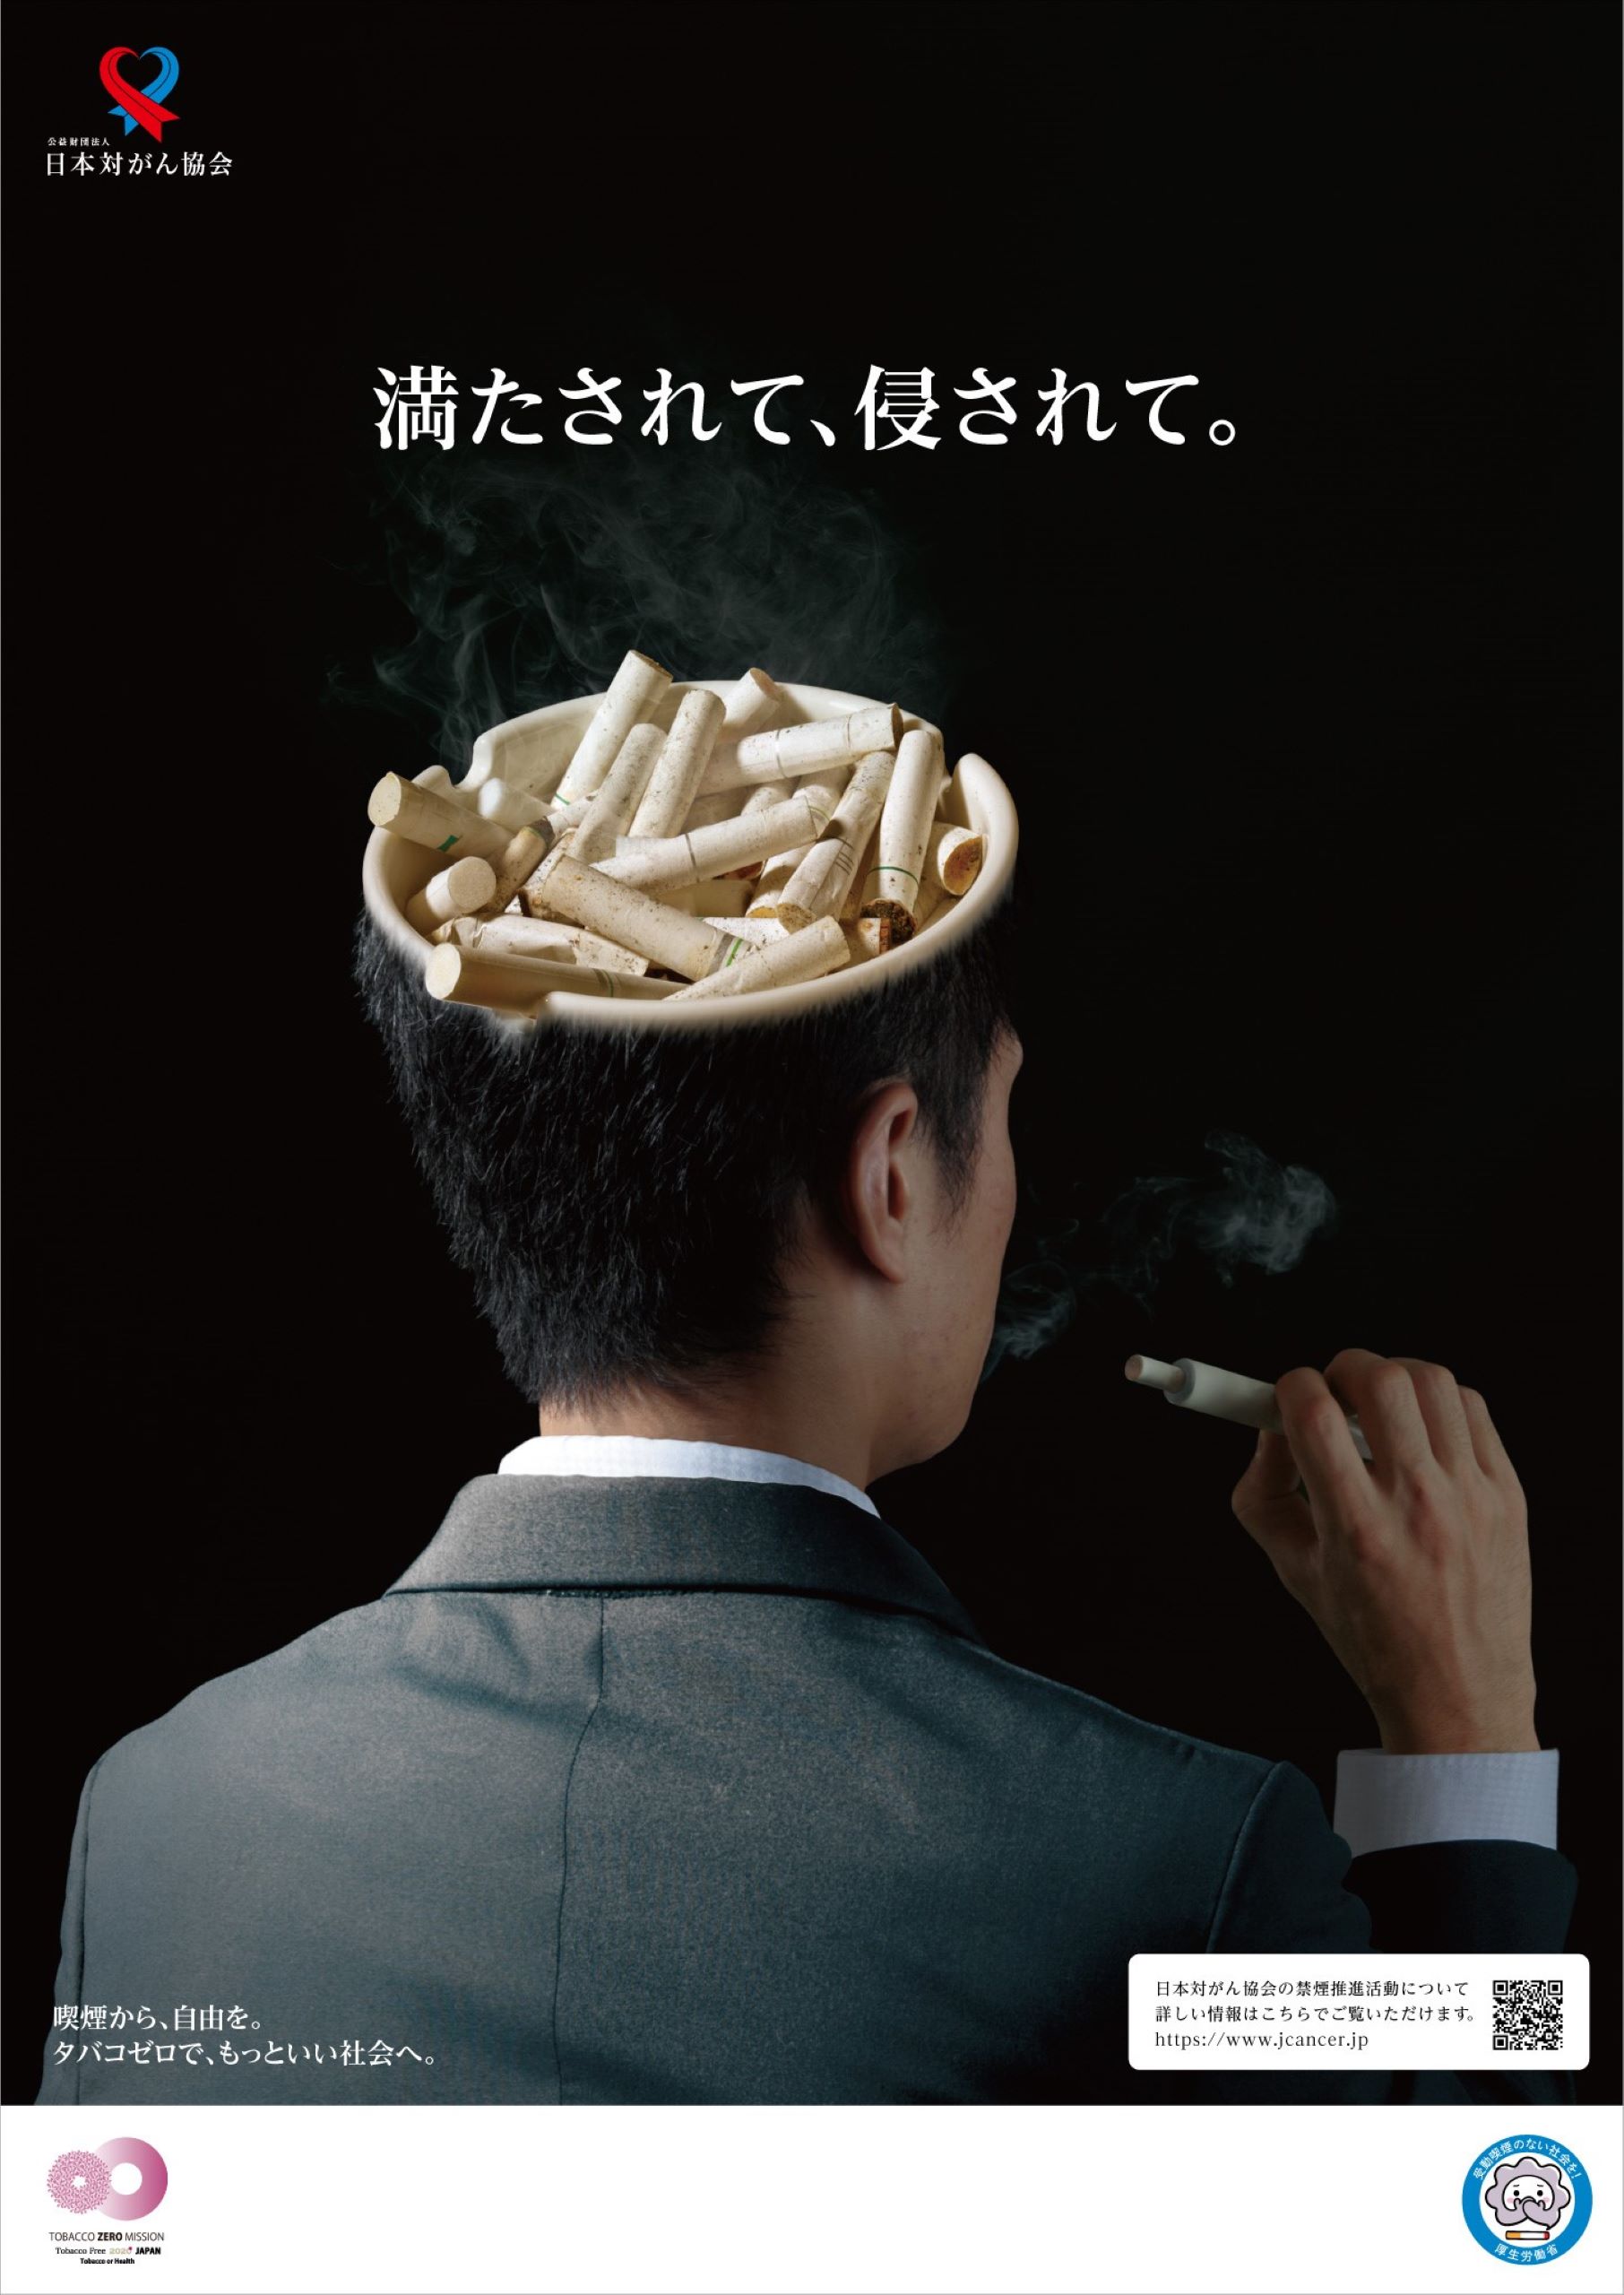 禁煙推進 日本対がん協会